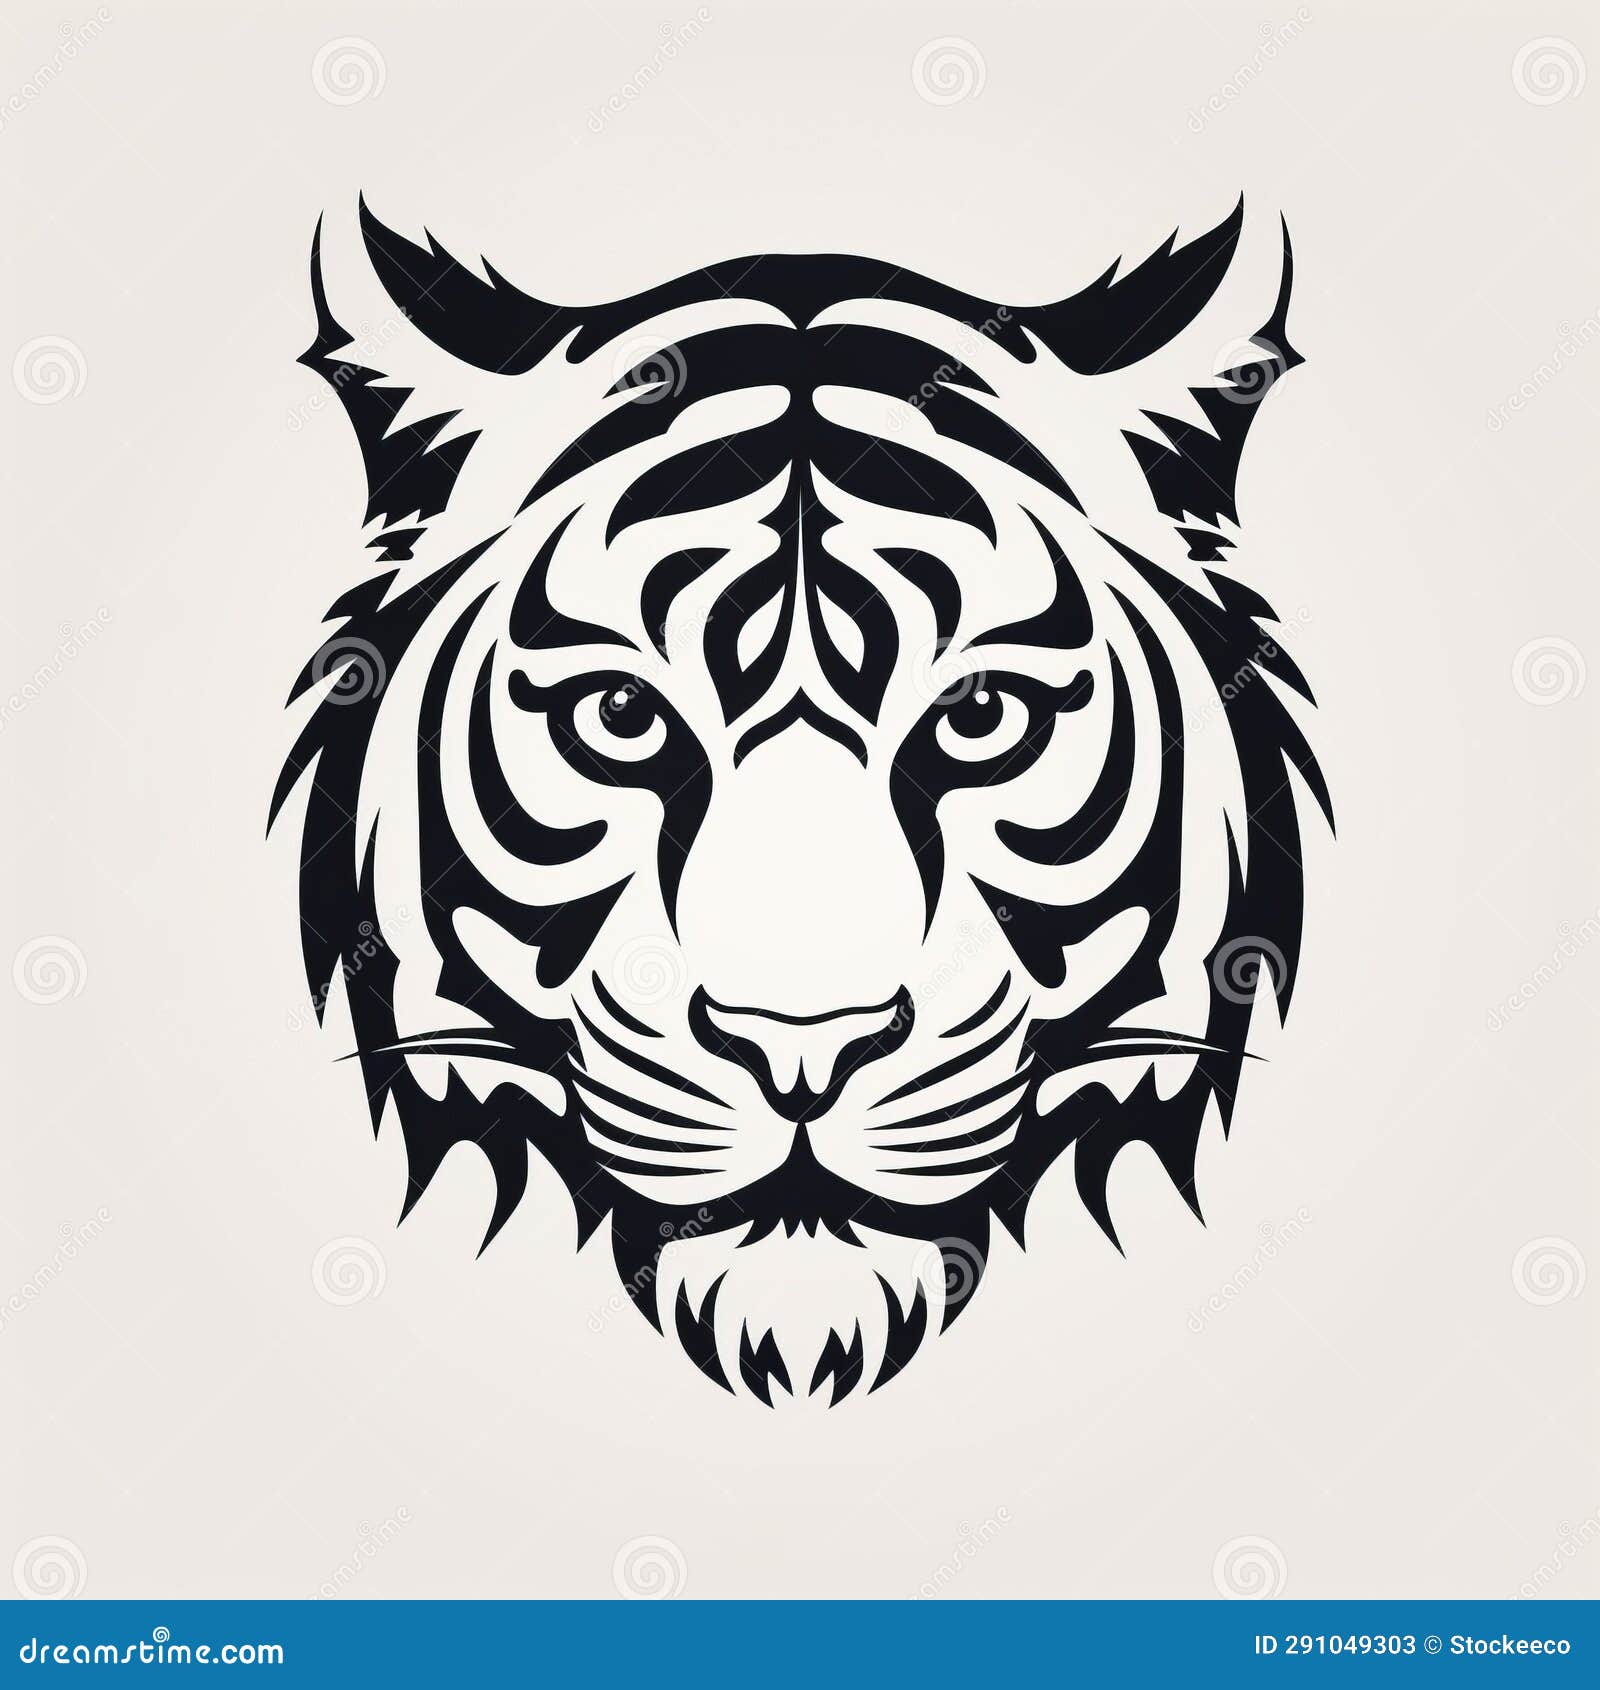 Realistic tiger tattoo design references – TattooDesignStock